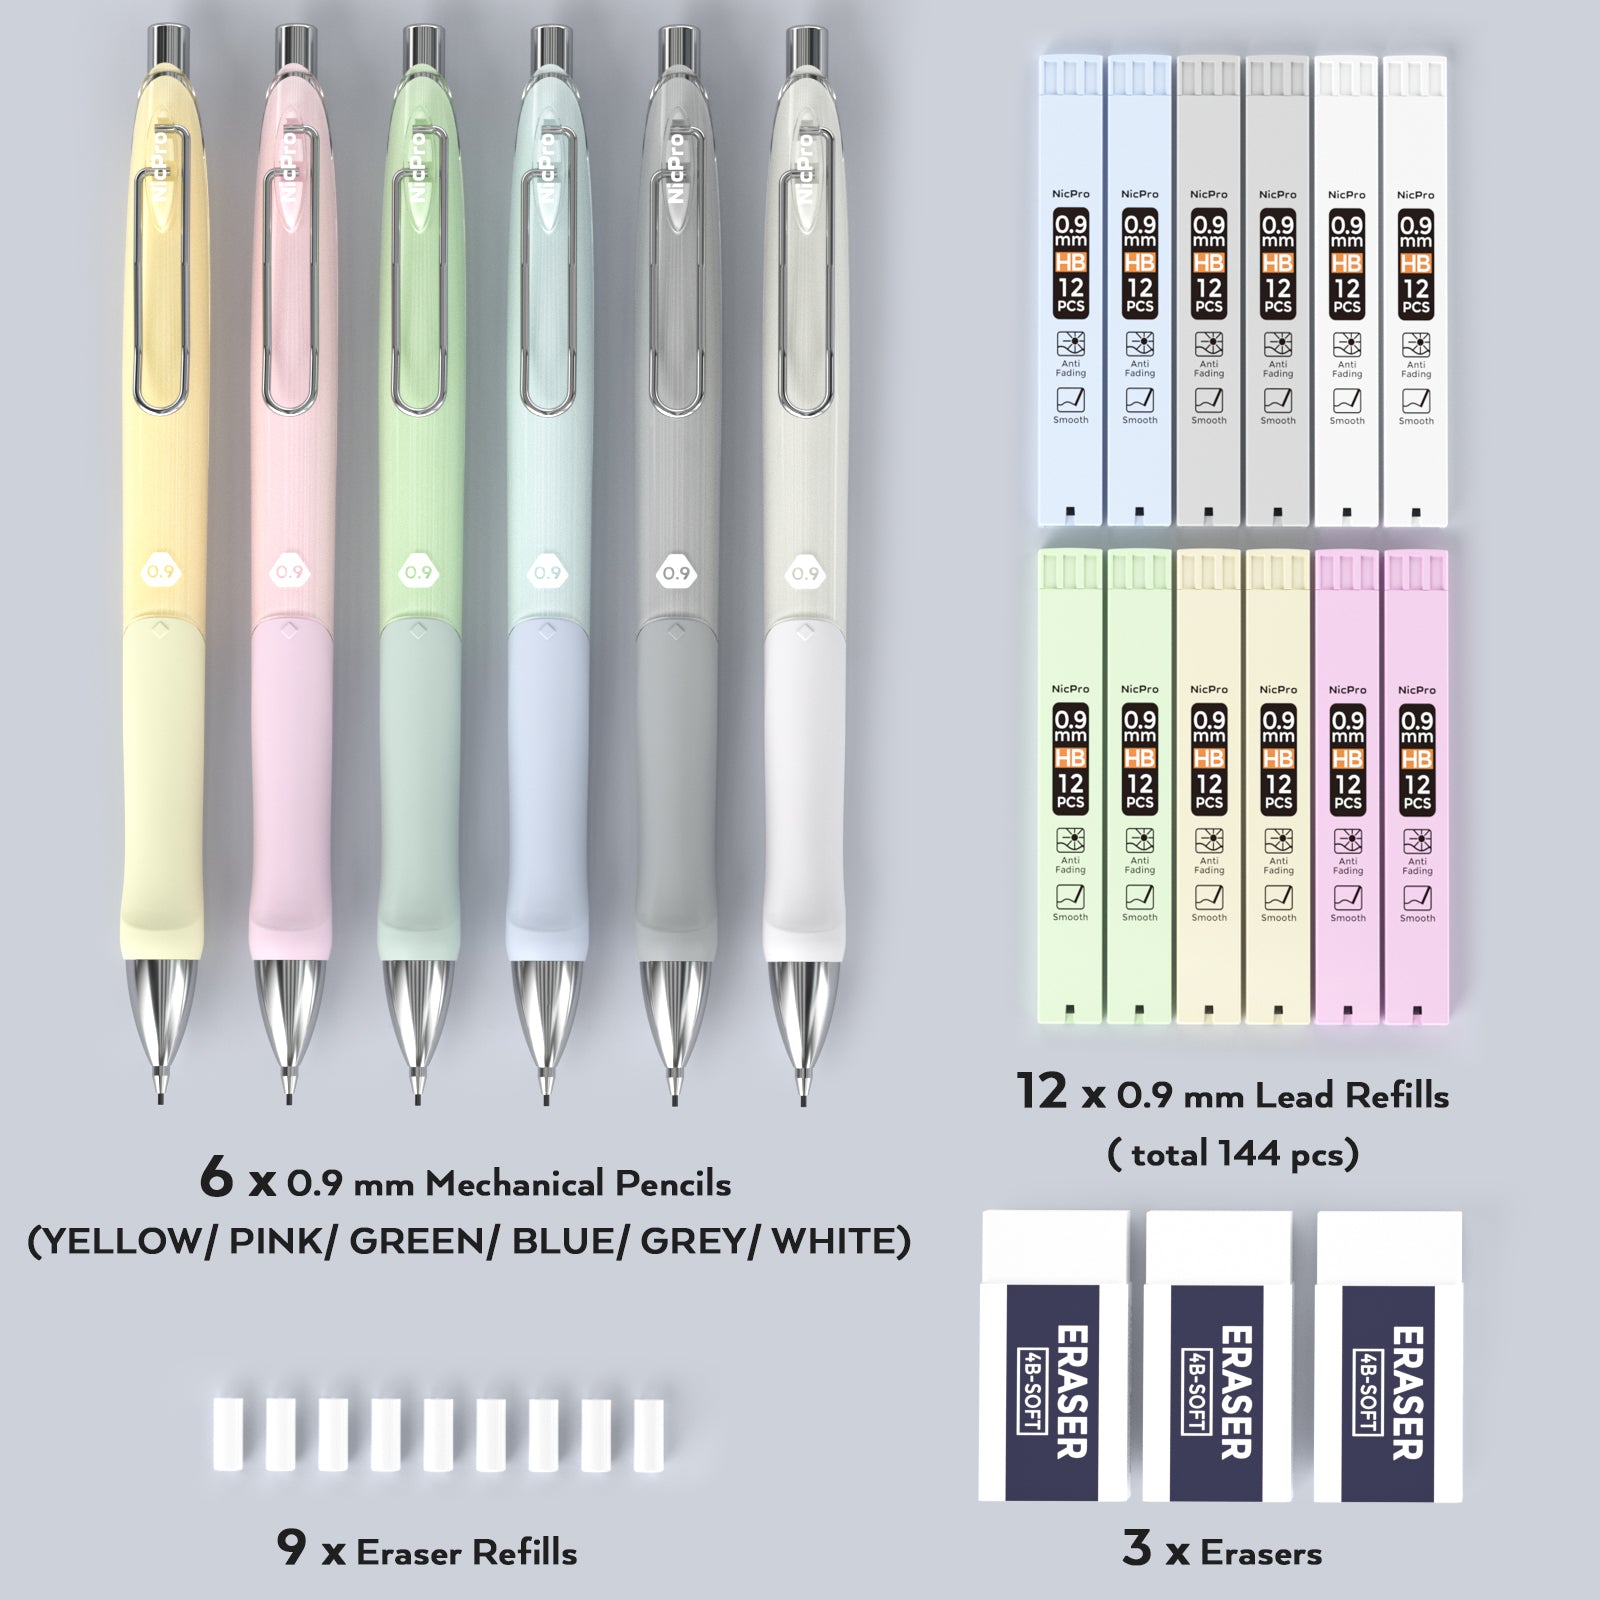 Nicpro 6 Color Pastel Mechanical Pencil Set 0.9 mm for School, Cute Me